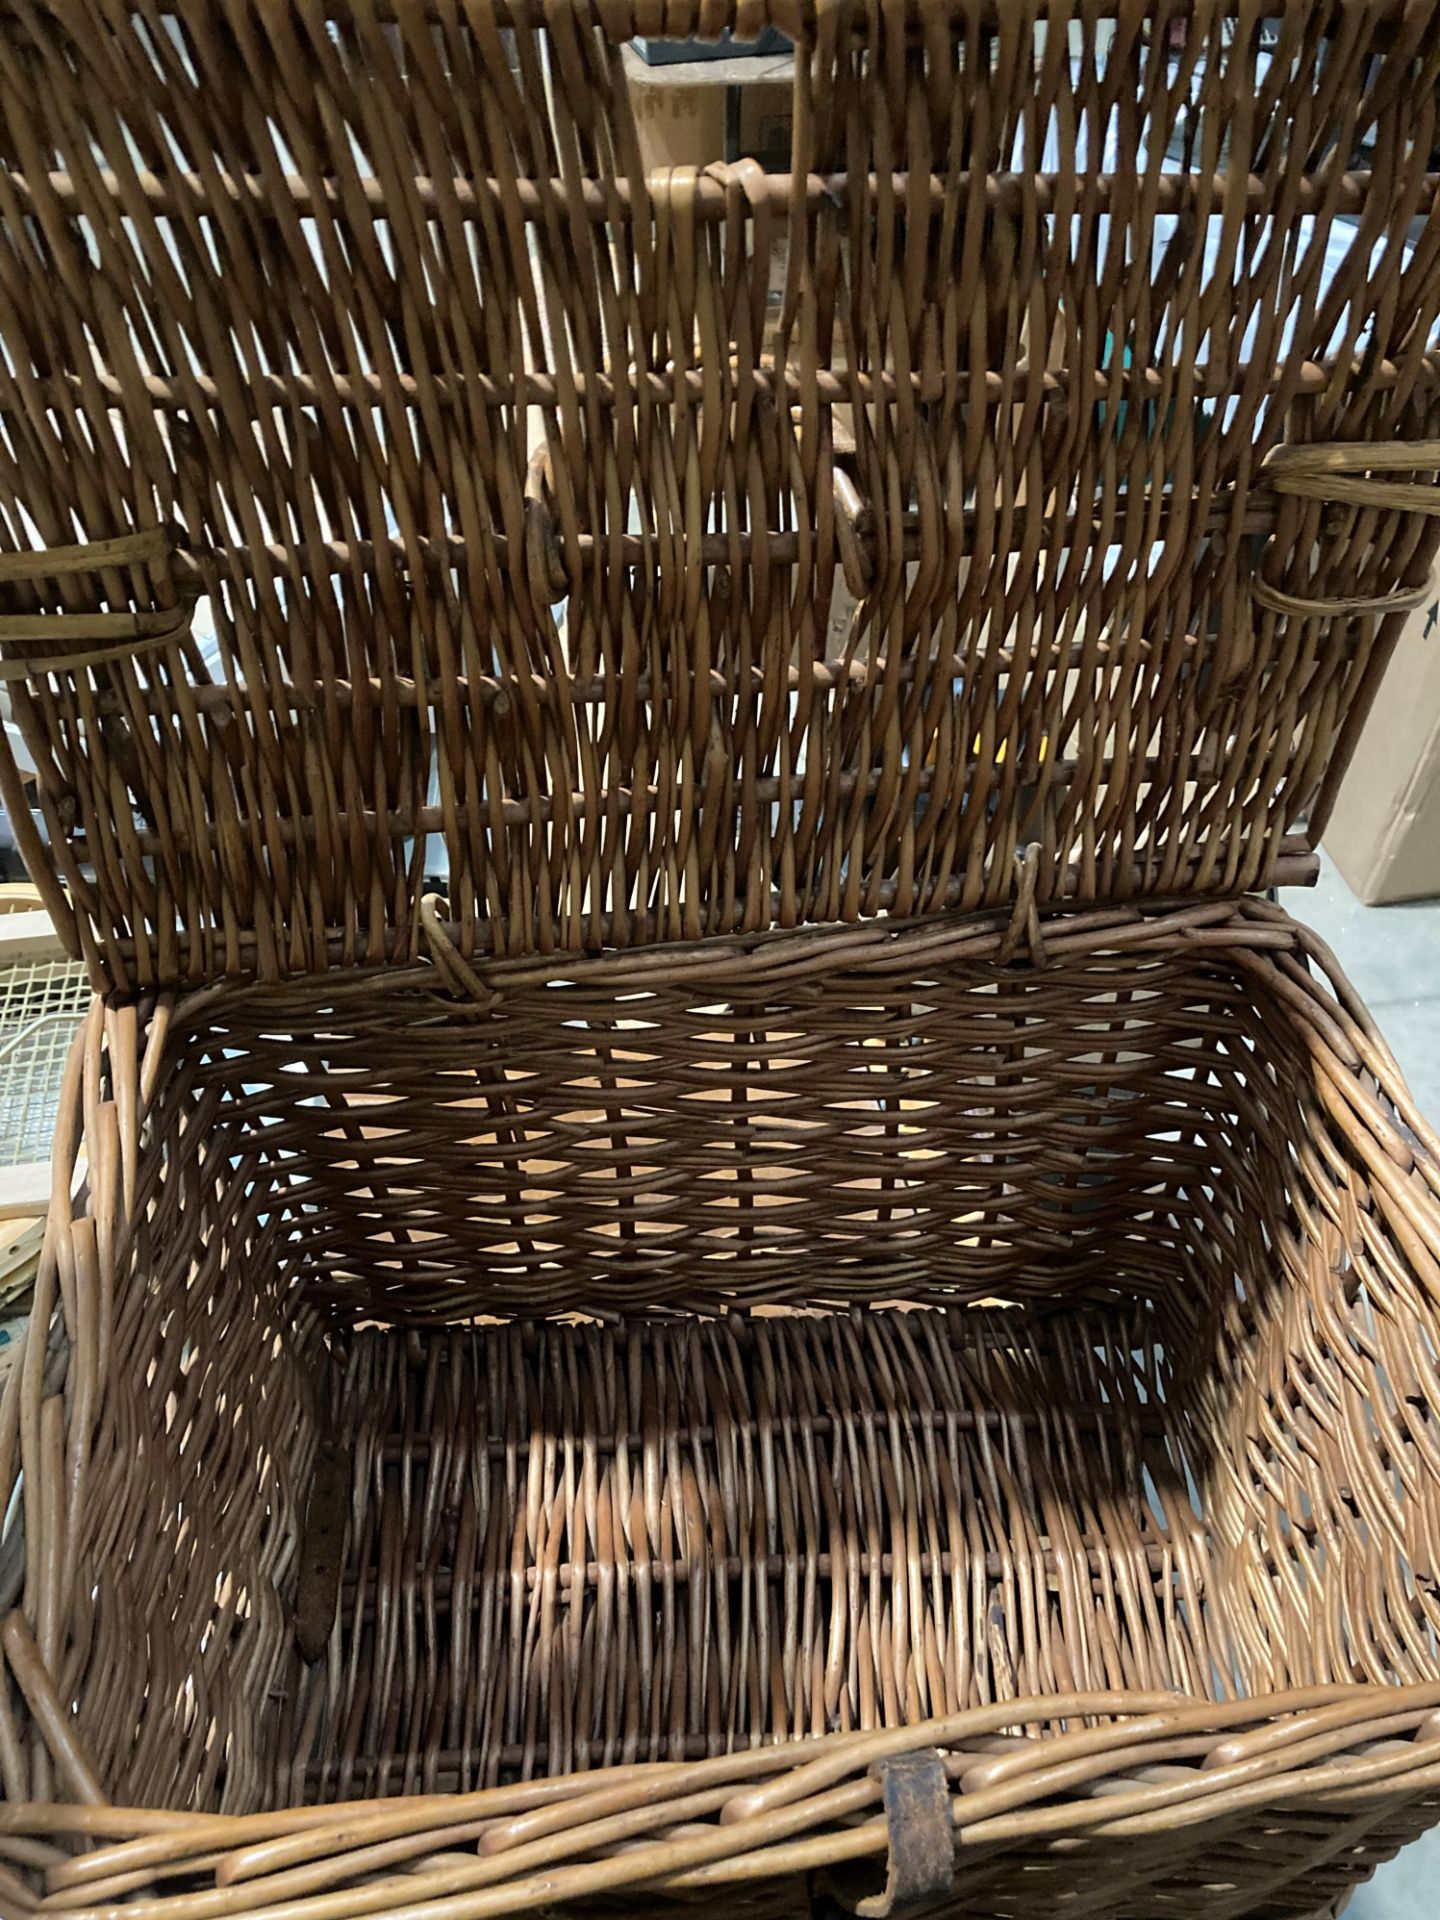 A wicker basket 45cm x 35cm x 20cm high. - Image 2 of 2